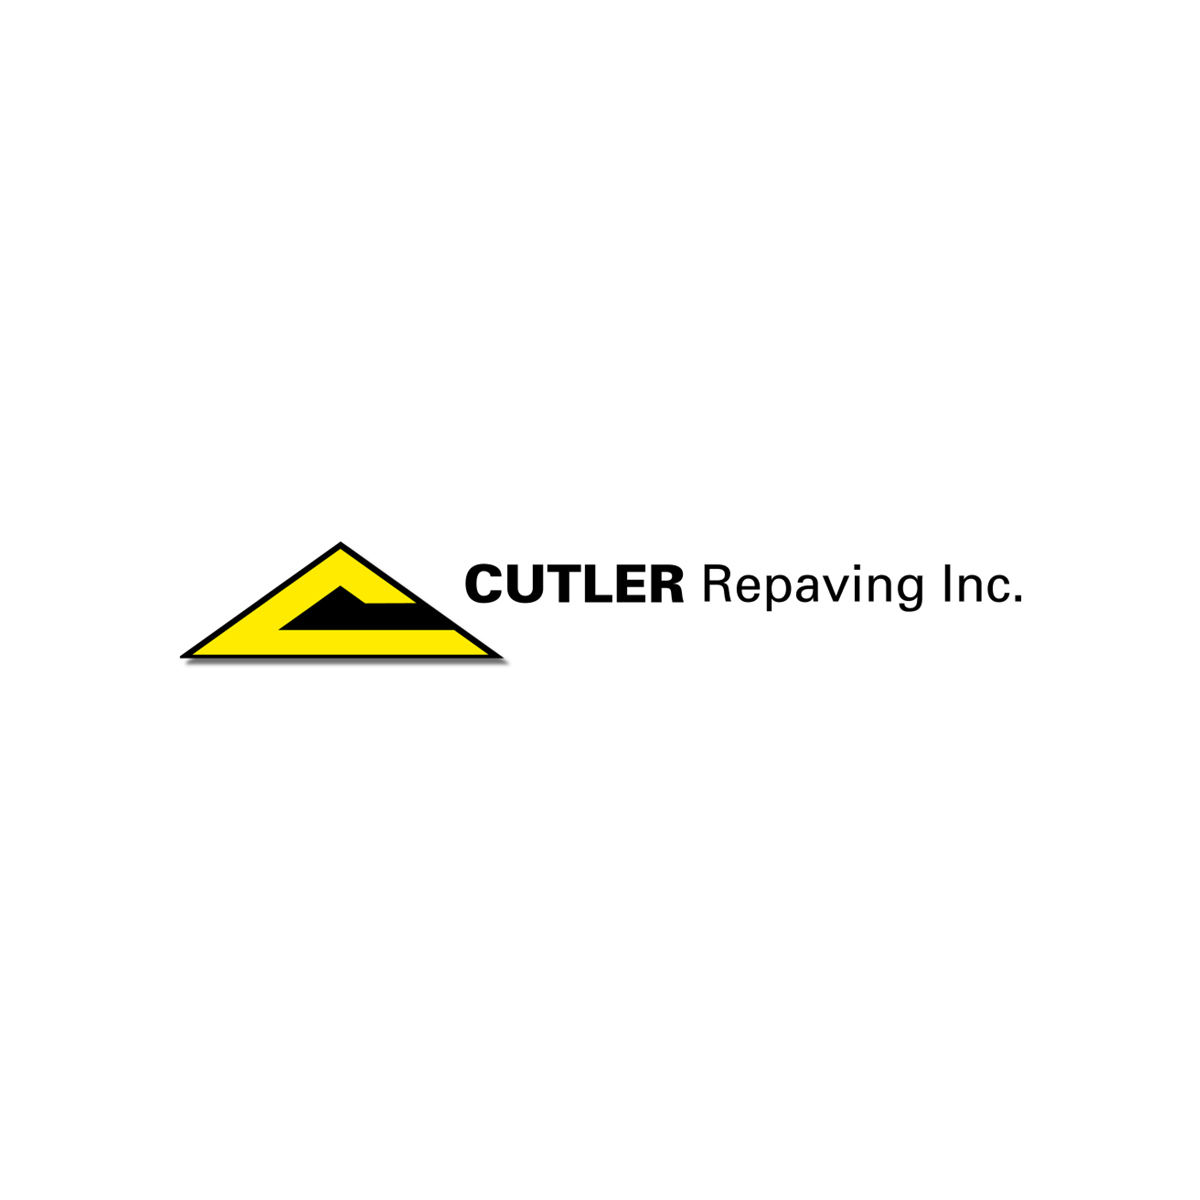 Cutler Repaving logo.jpg